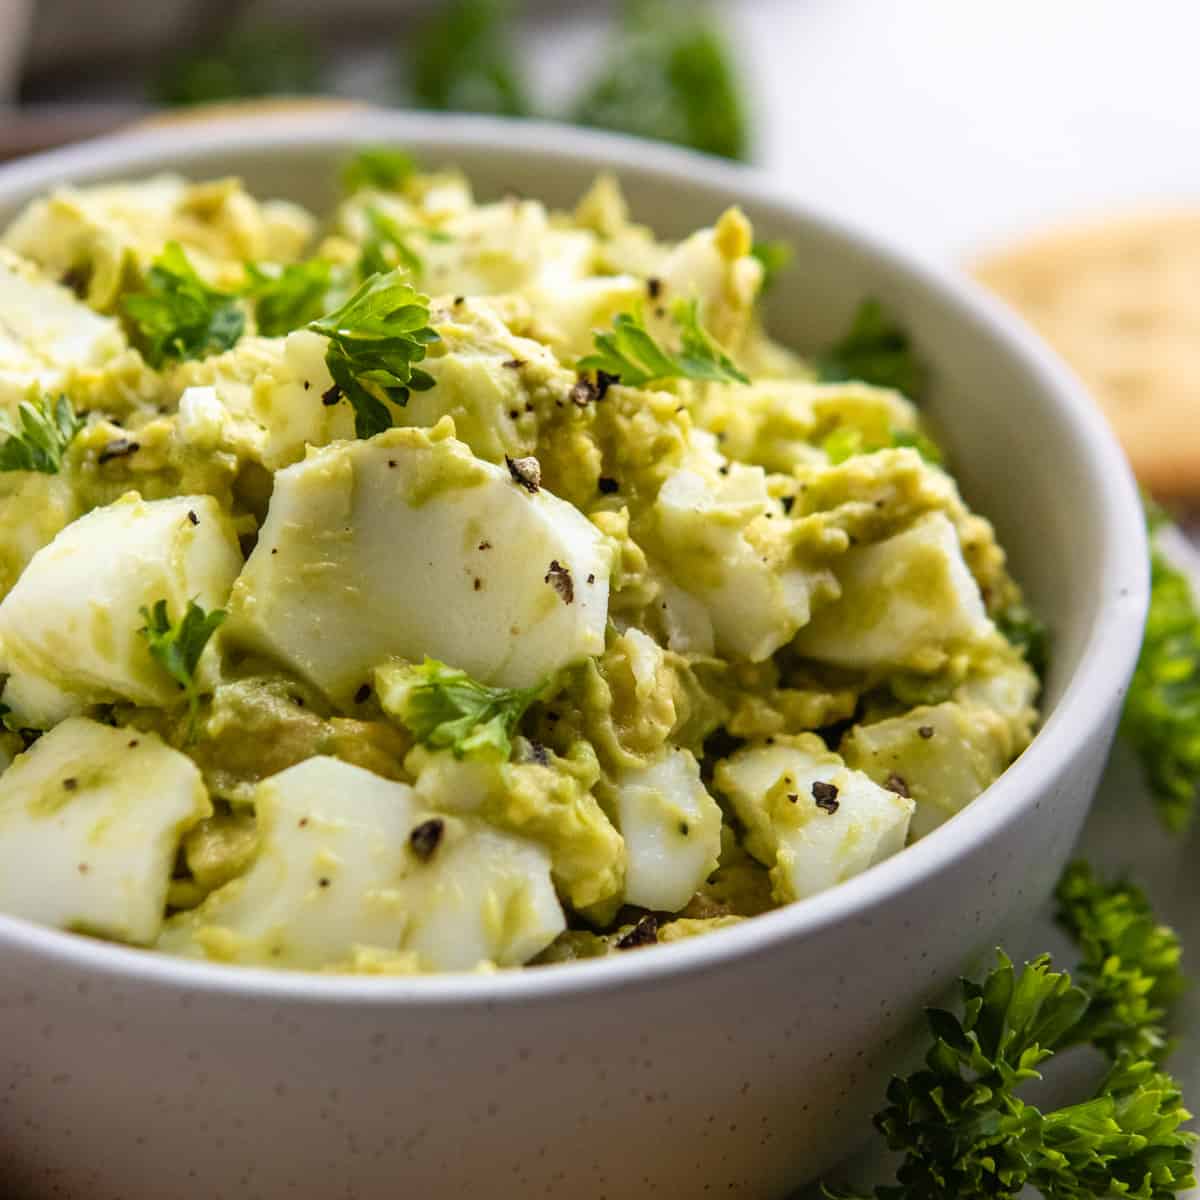 https://lemonsandzest.com/wp-content/uploads/2021/03/Avocado-Egg-Salad-10.jpg